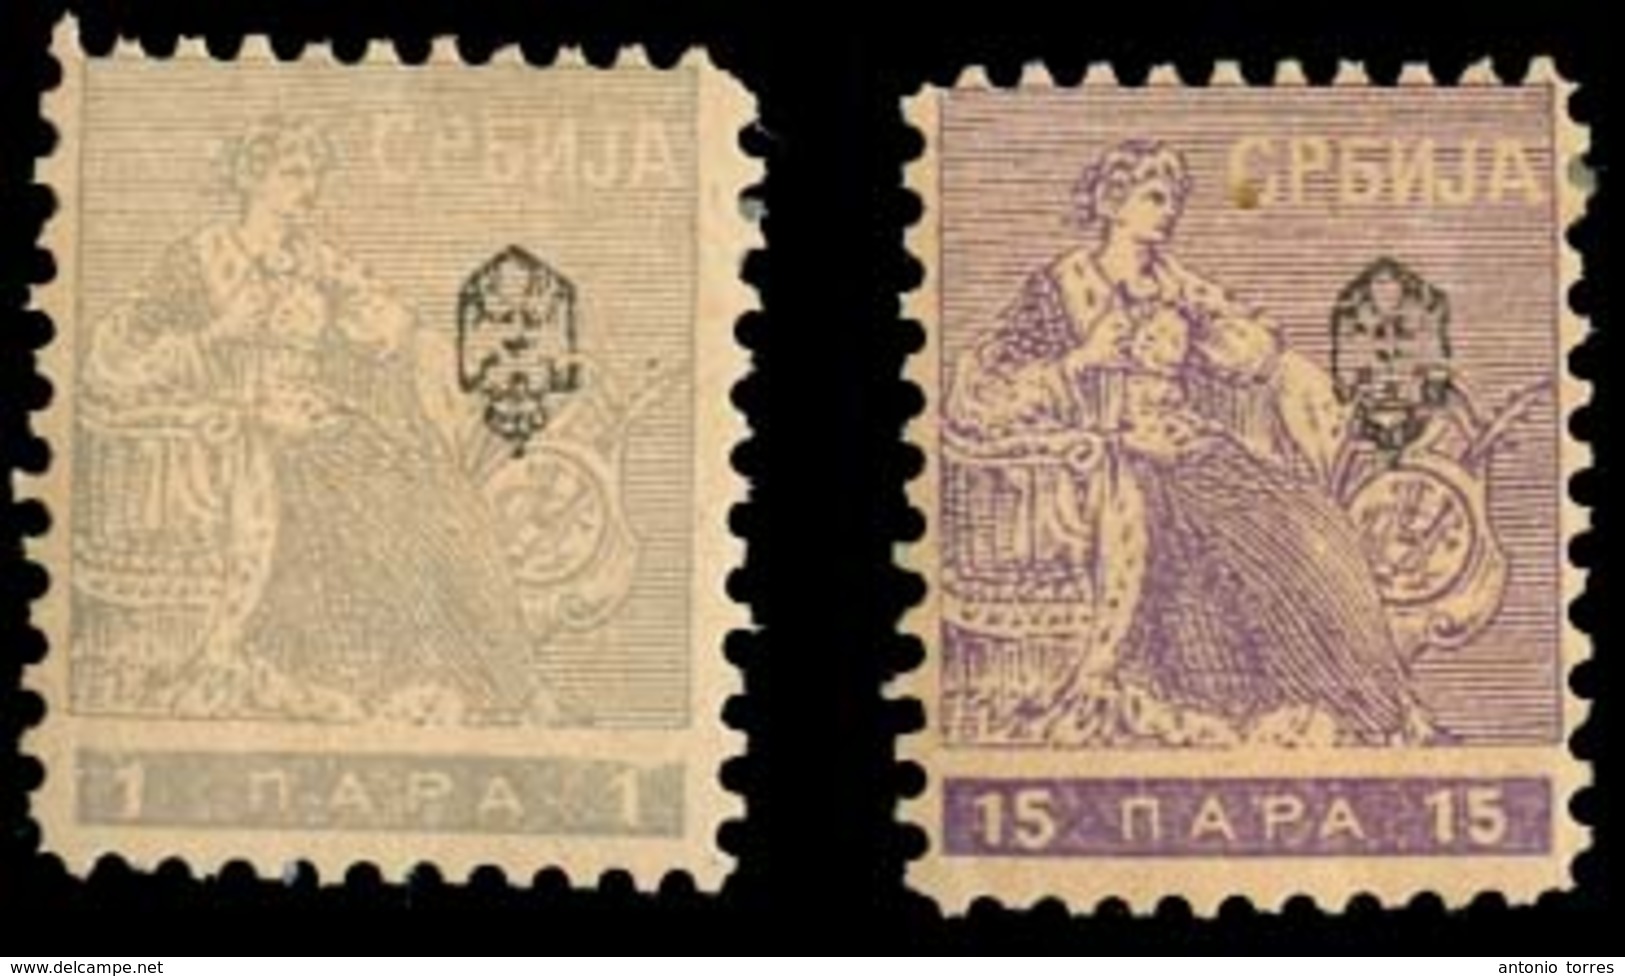 SERBIA. 1911. Newspaper Stamps. Yv TJ - 1*, 4*. 2 Ovptd Values, 1p + 15p Inverted Overprint. Fine Mint. - Serbie